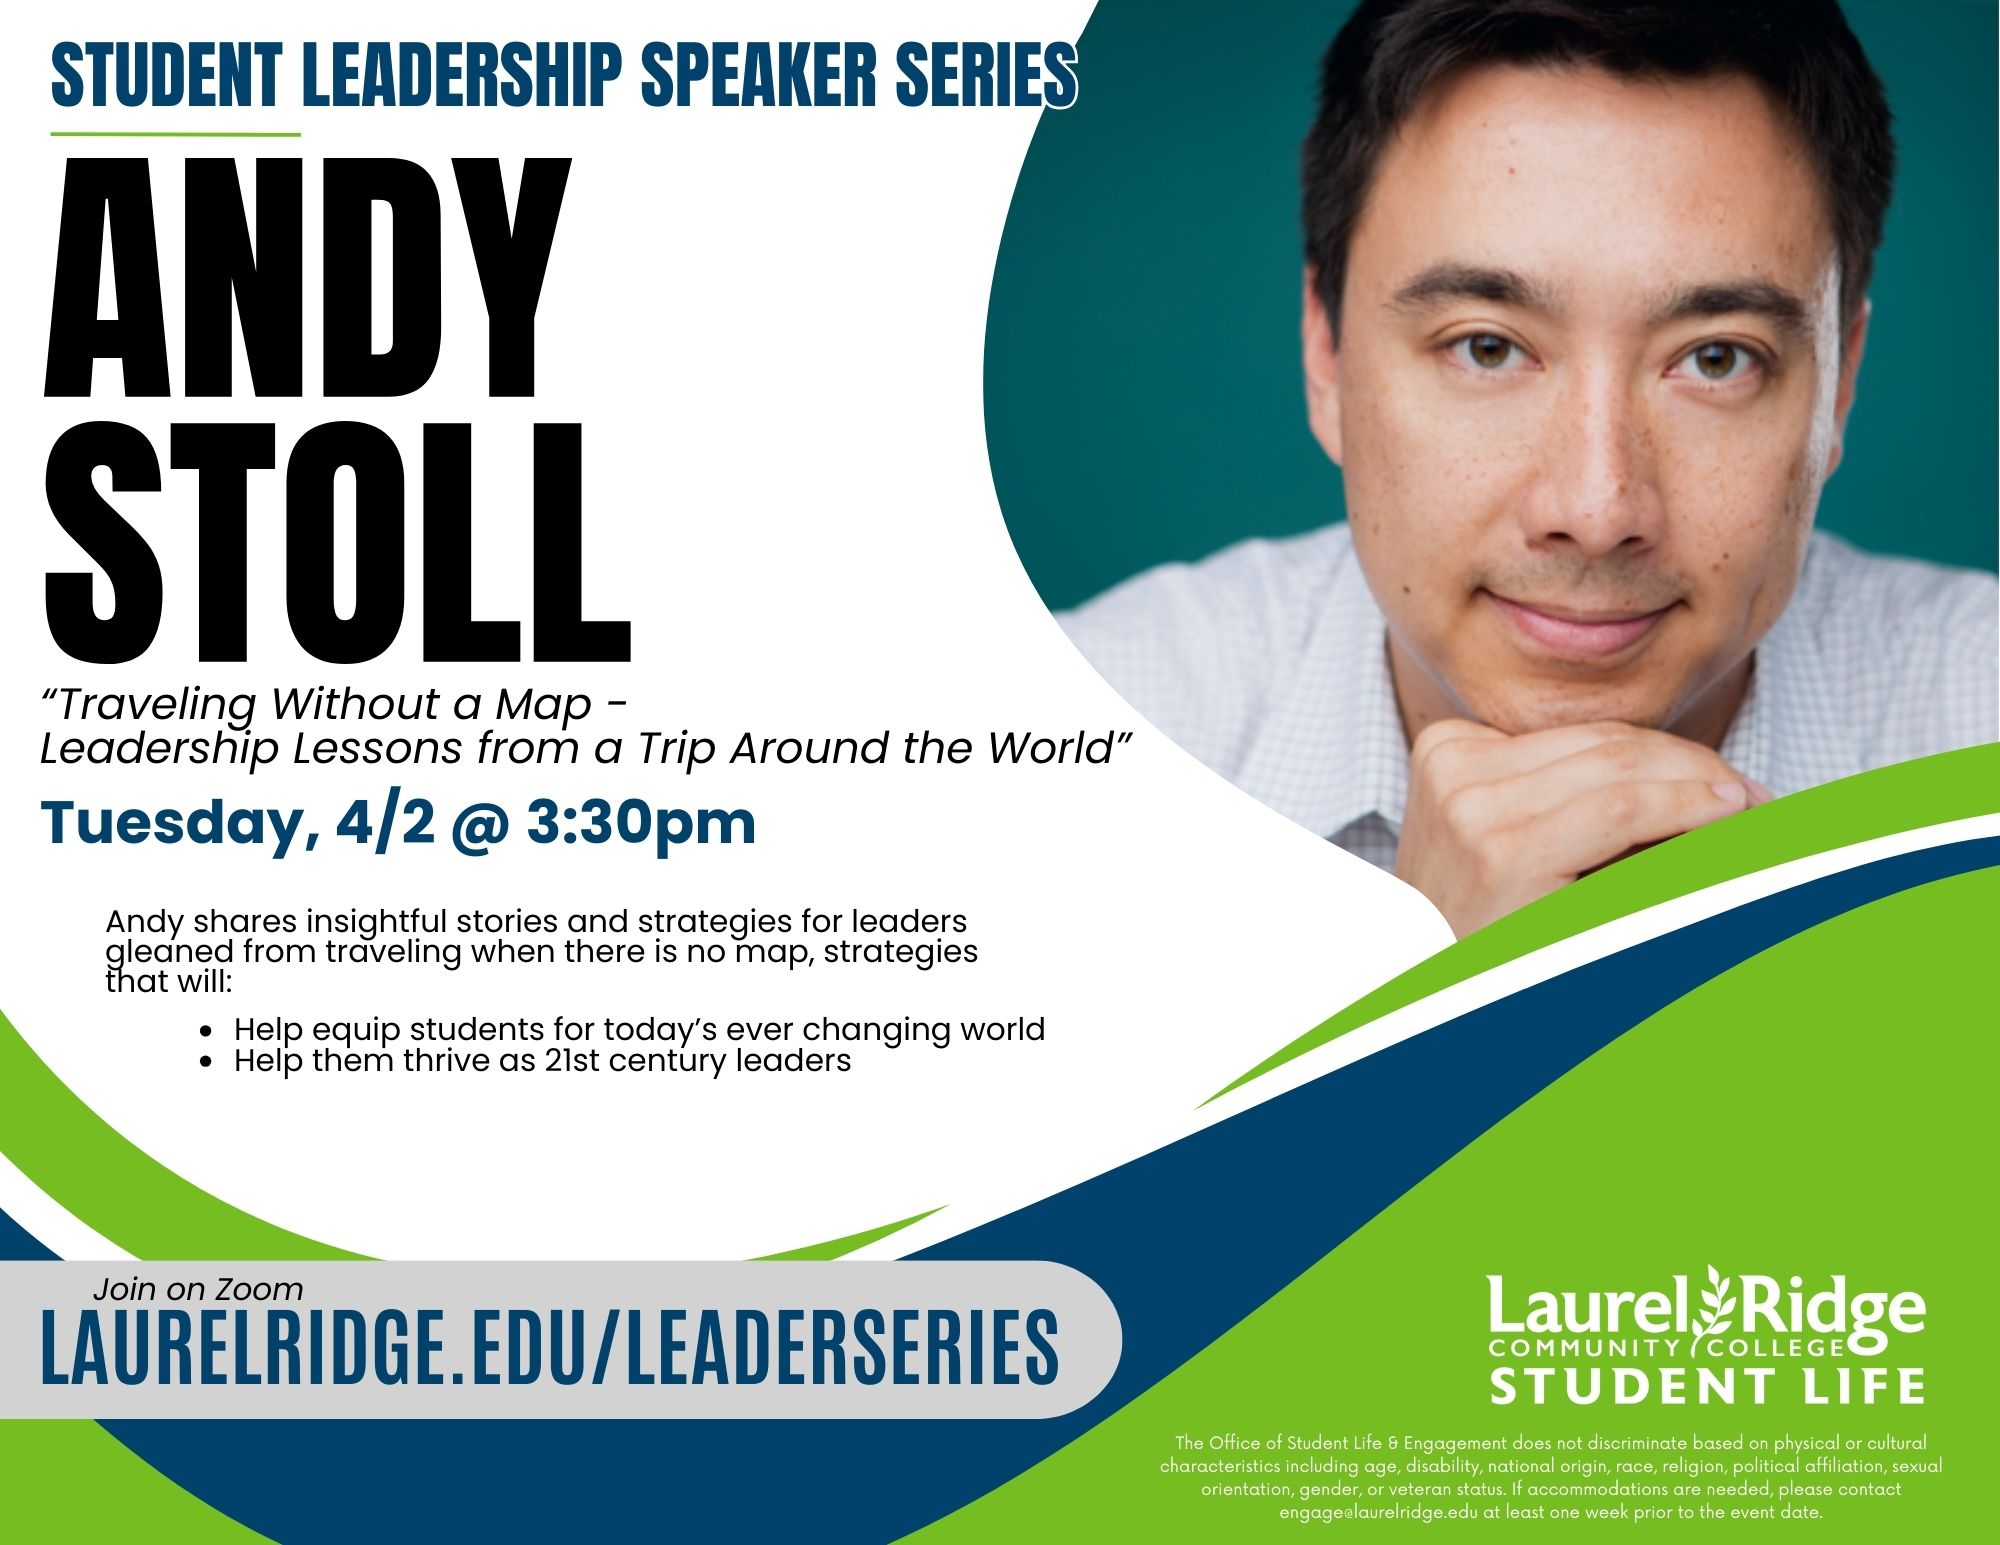 Student Leadership Speaker series - Andy spotlight